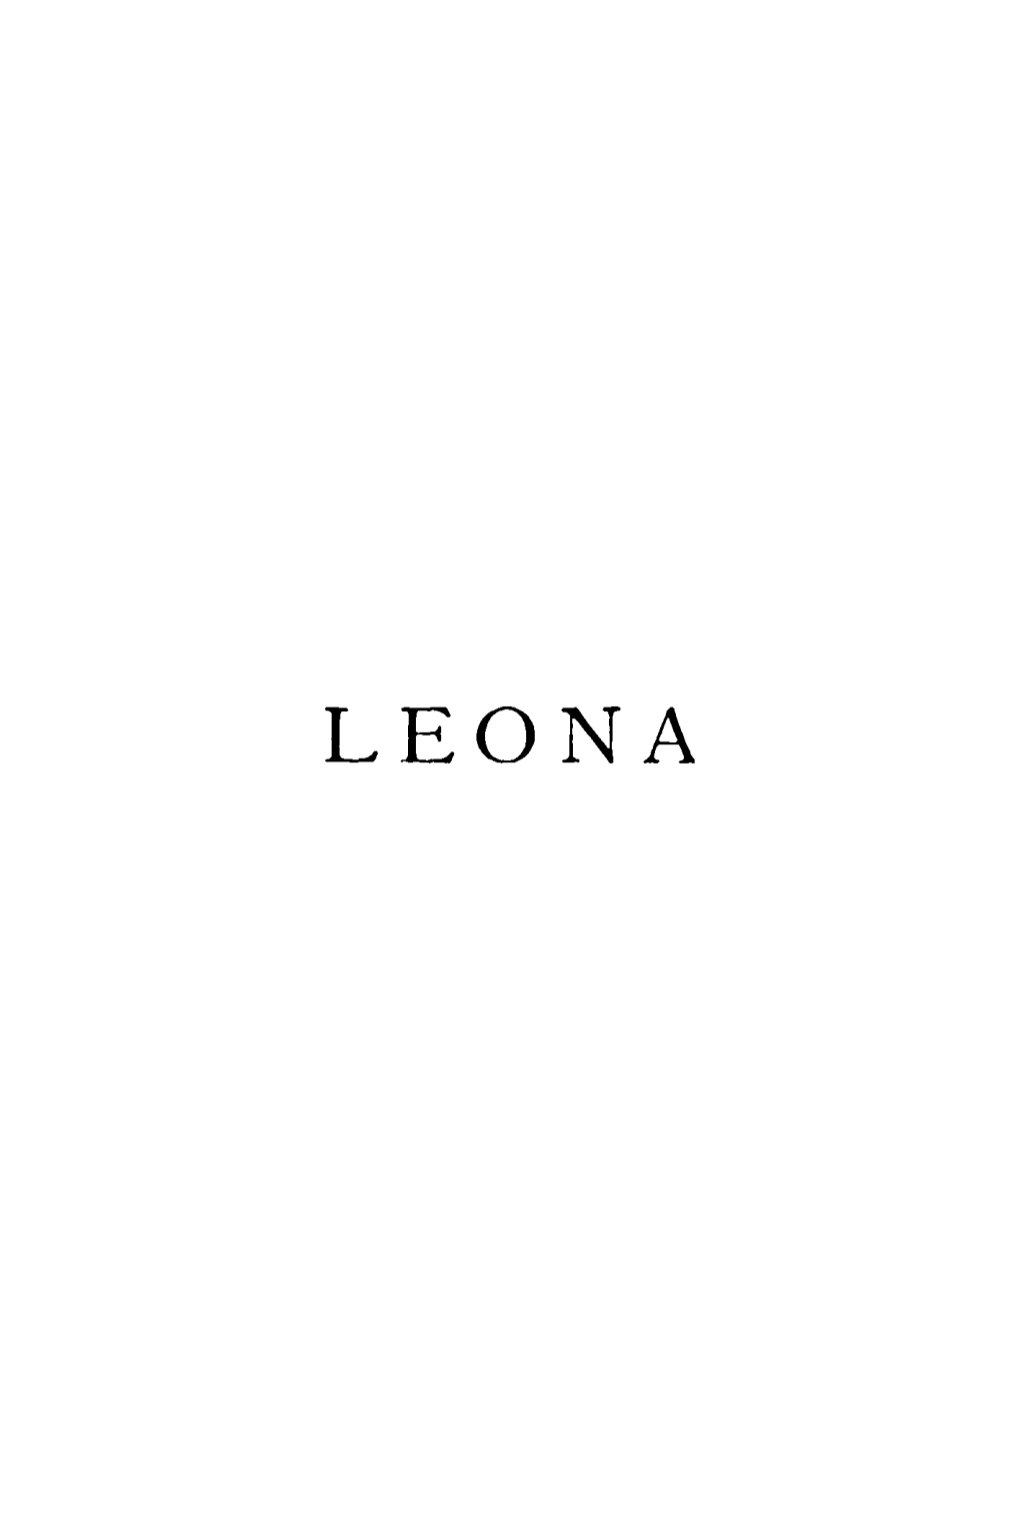 Leona: Leyenda